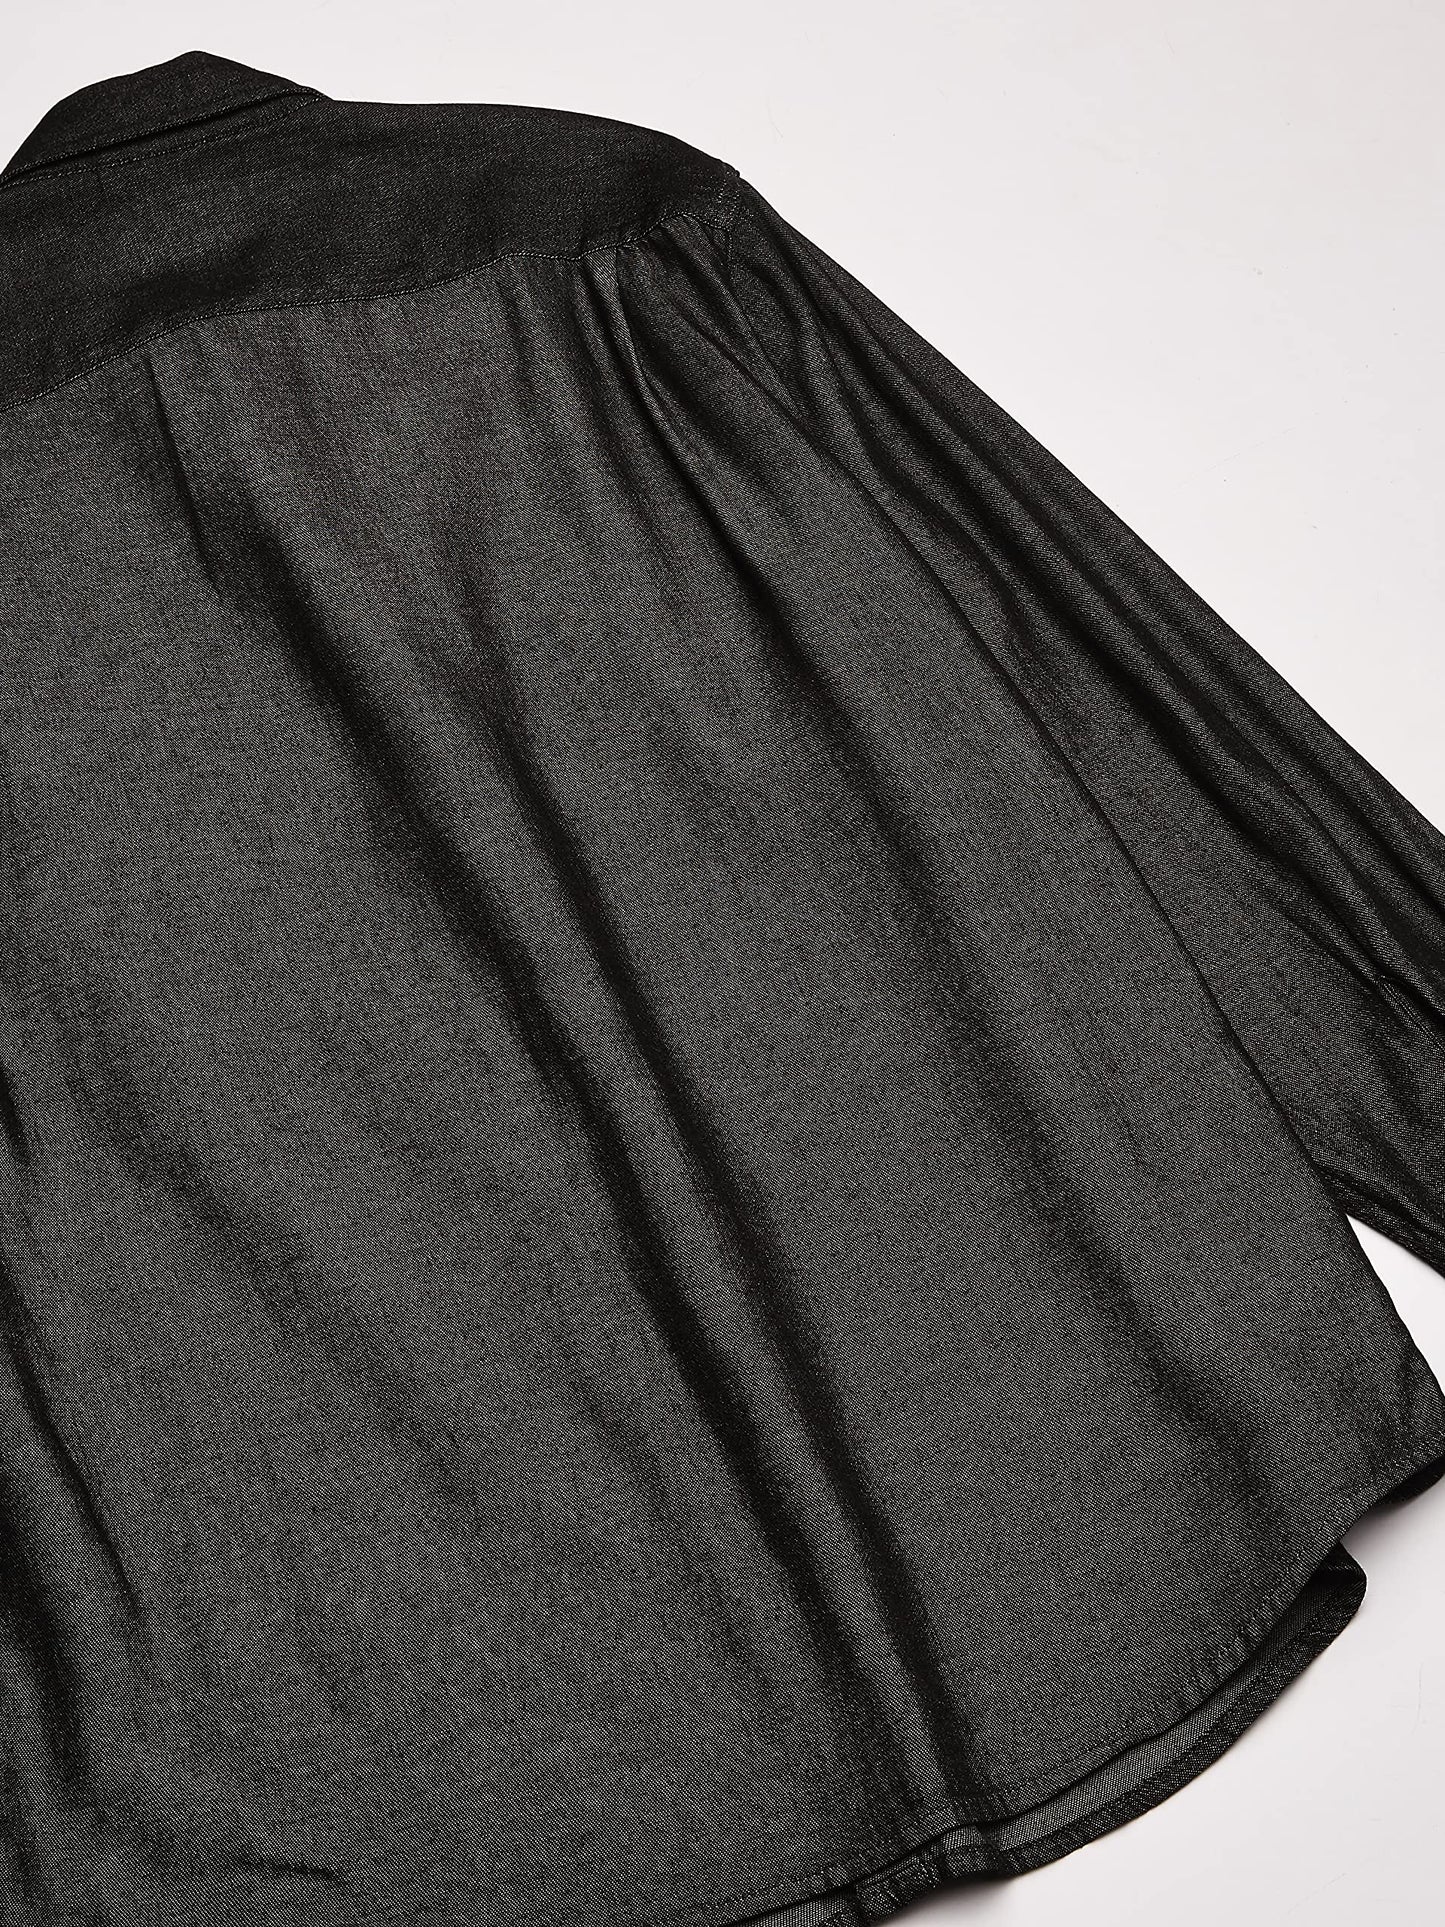 Wrangler Authentics Men's Long Sleeve Classic Woven Shirt, Black Denim, X-Large